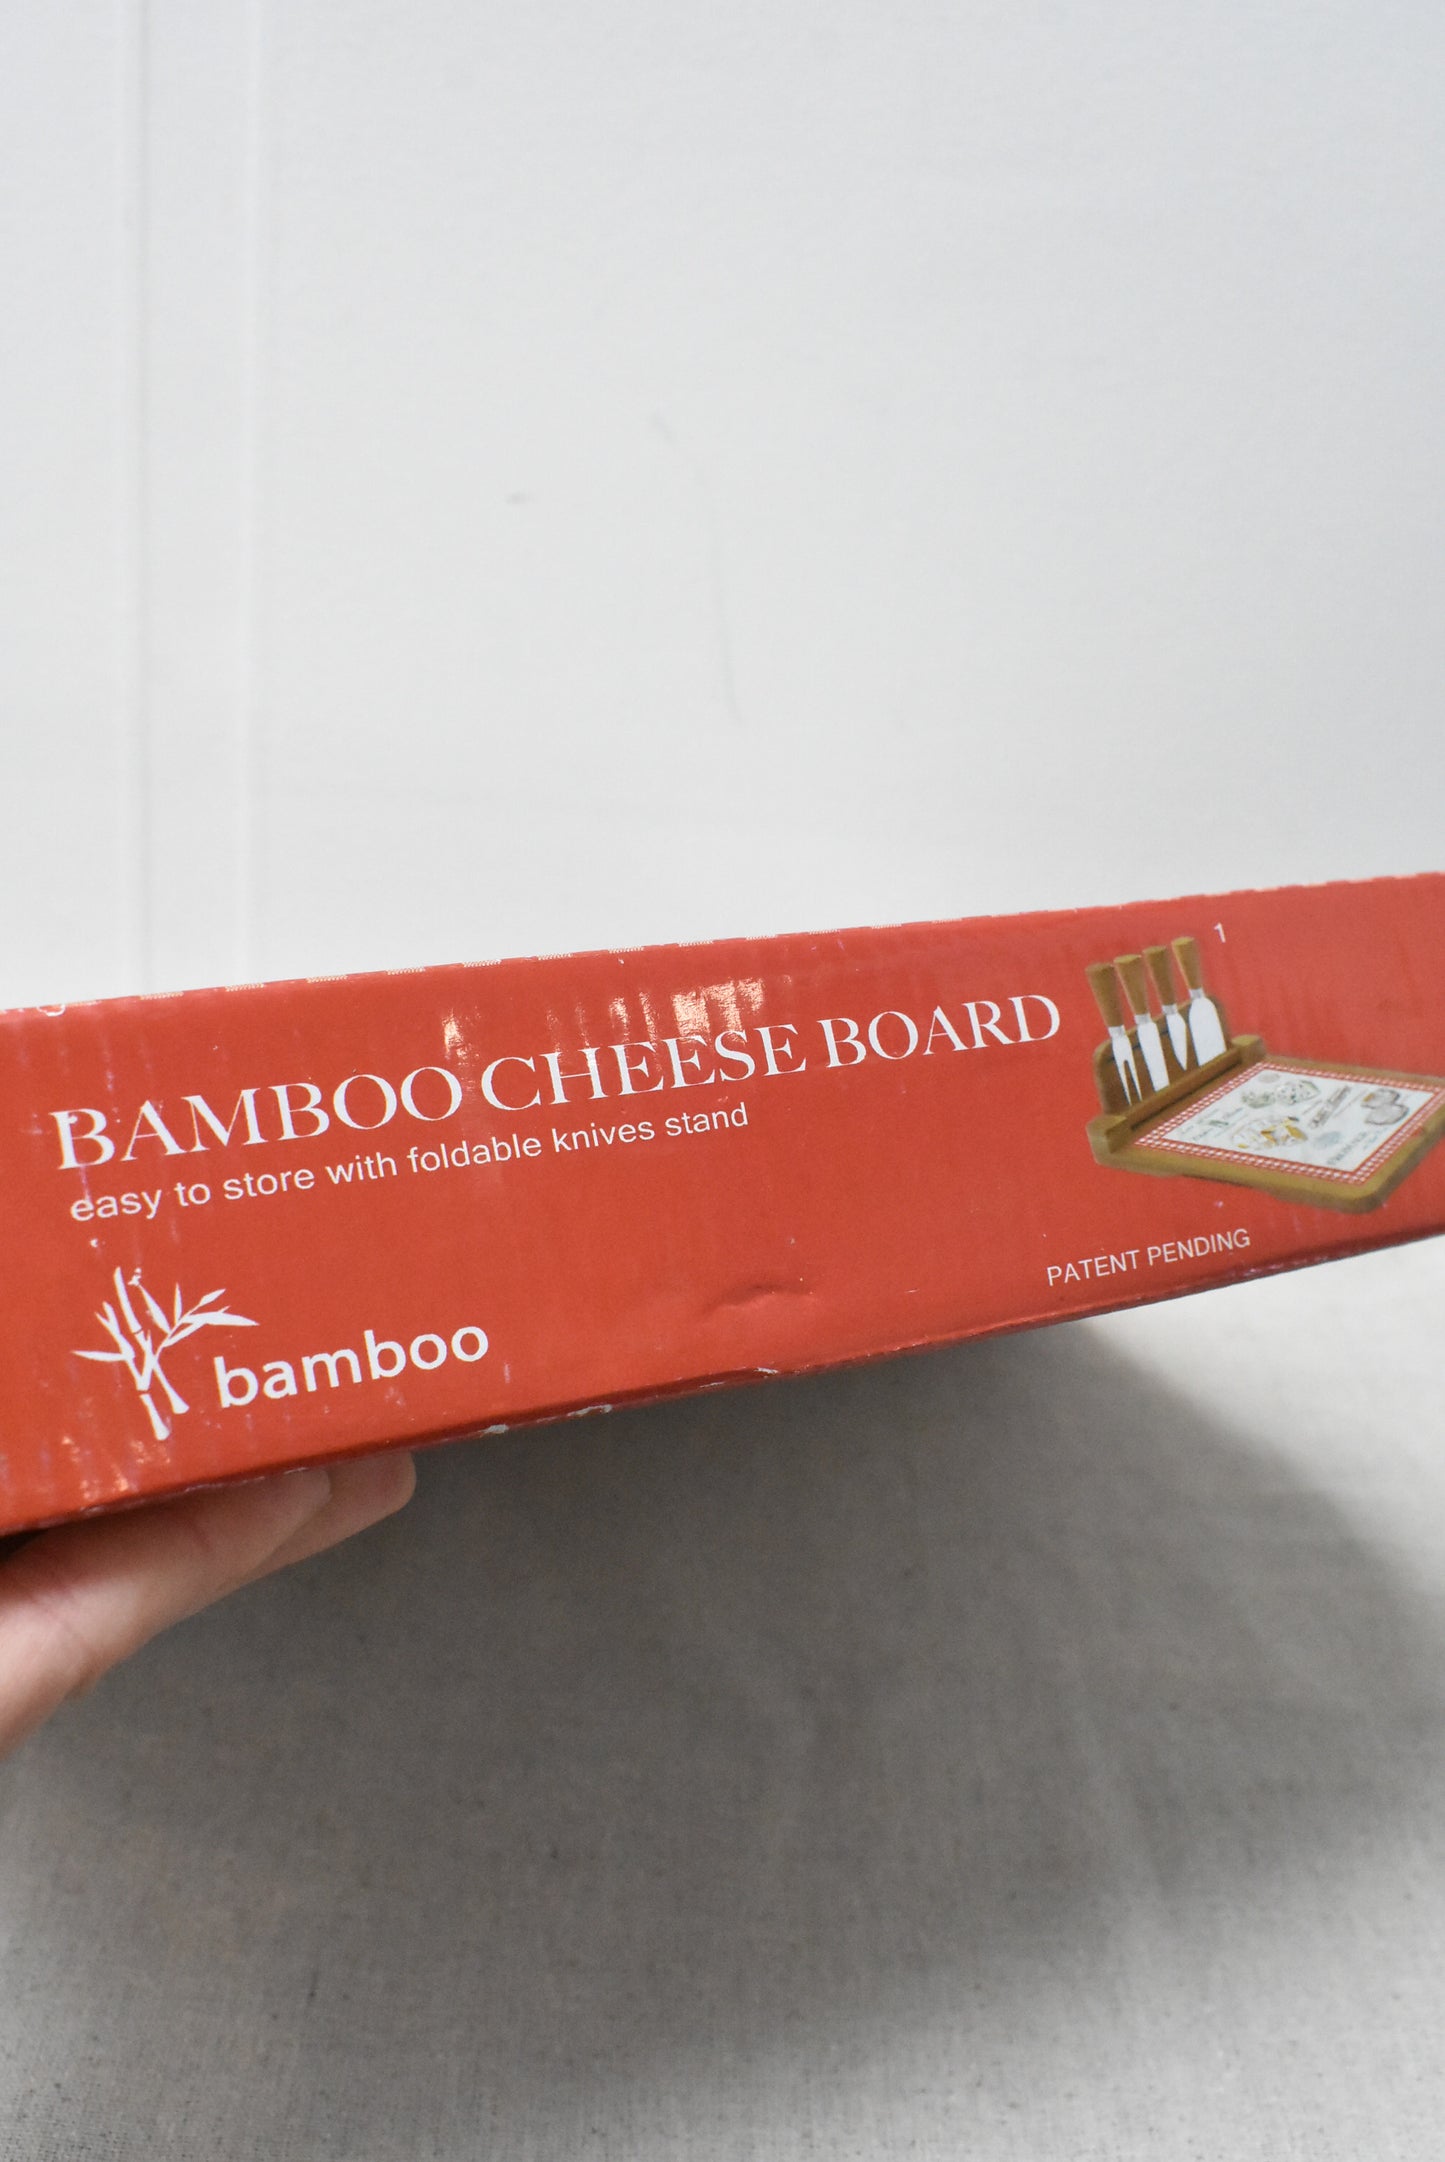 Bamboo cheese board